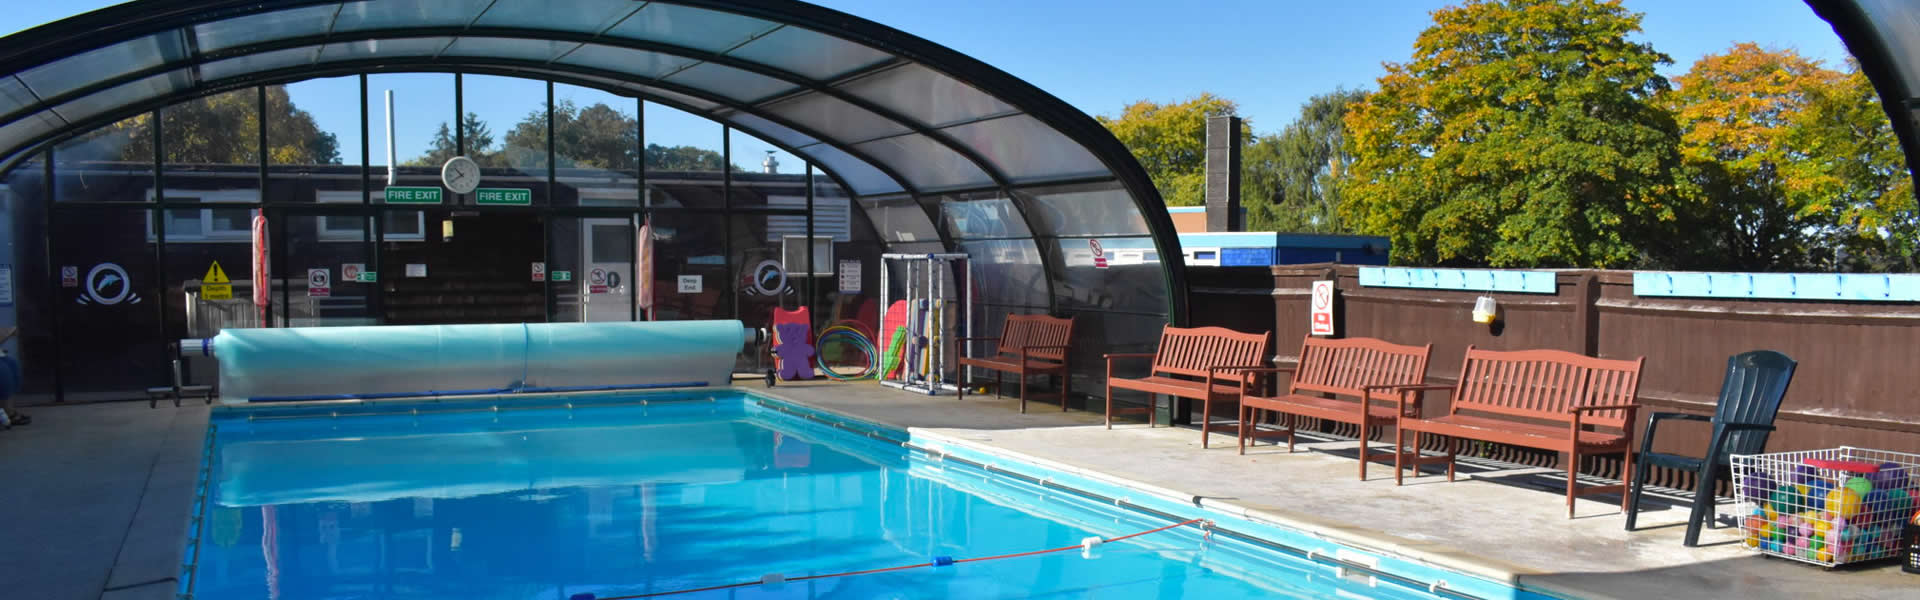 Chinnor Community Swimming Pool